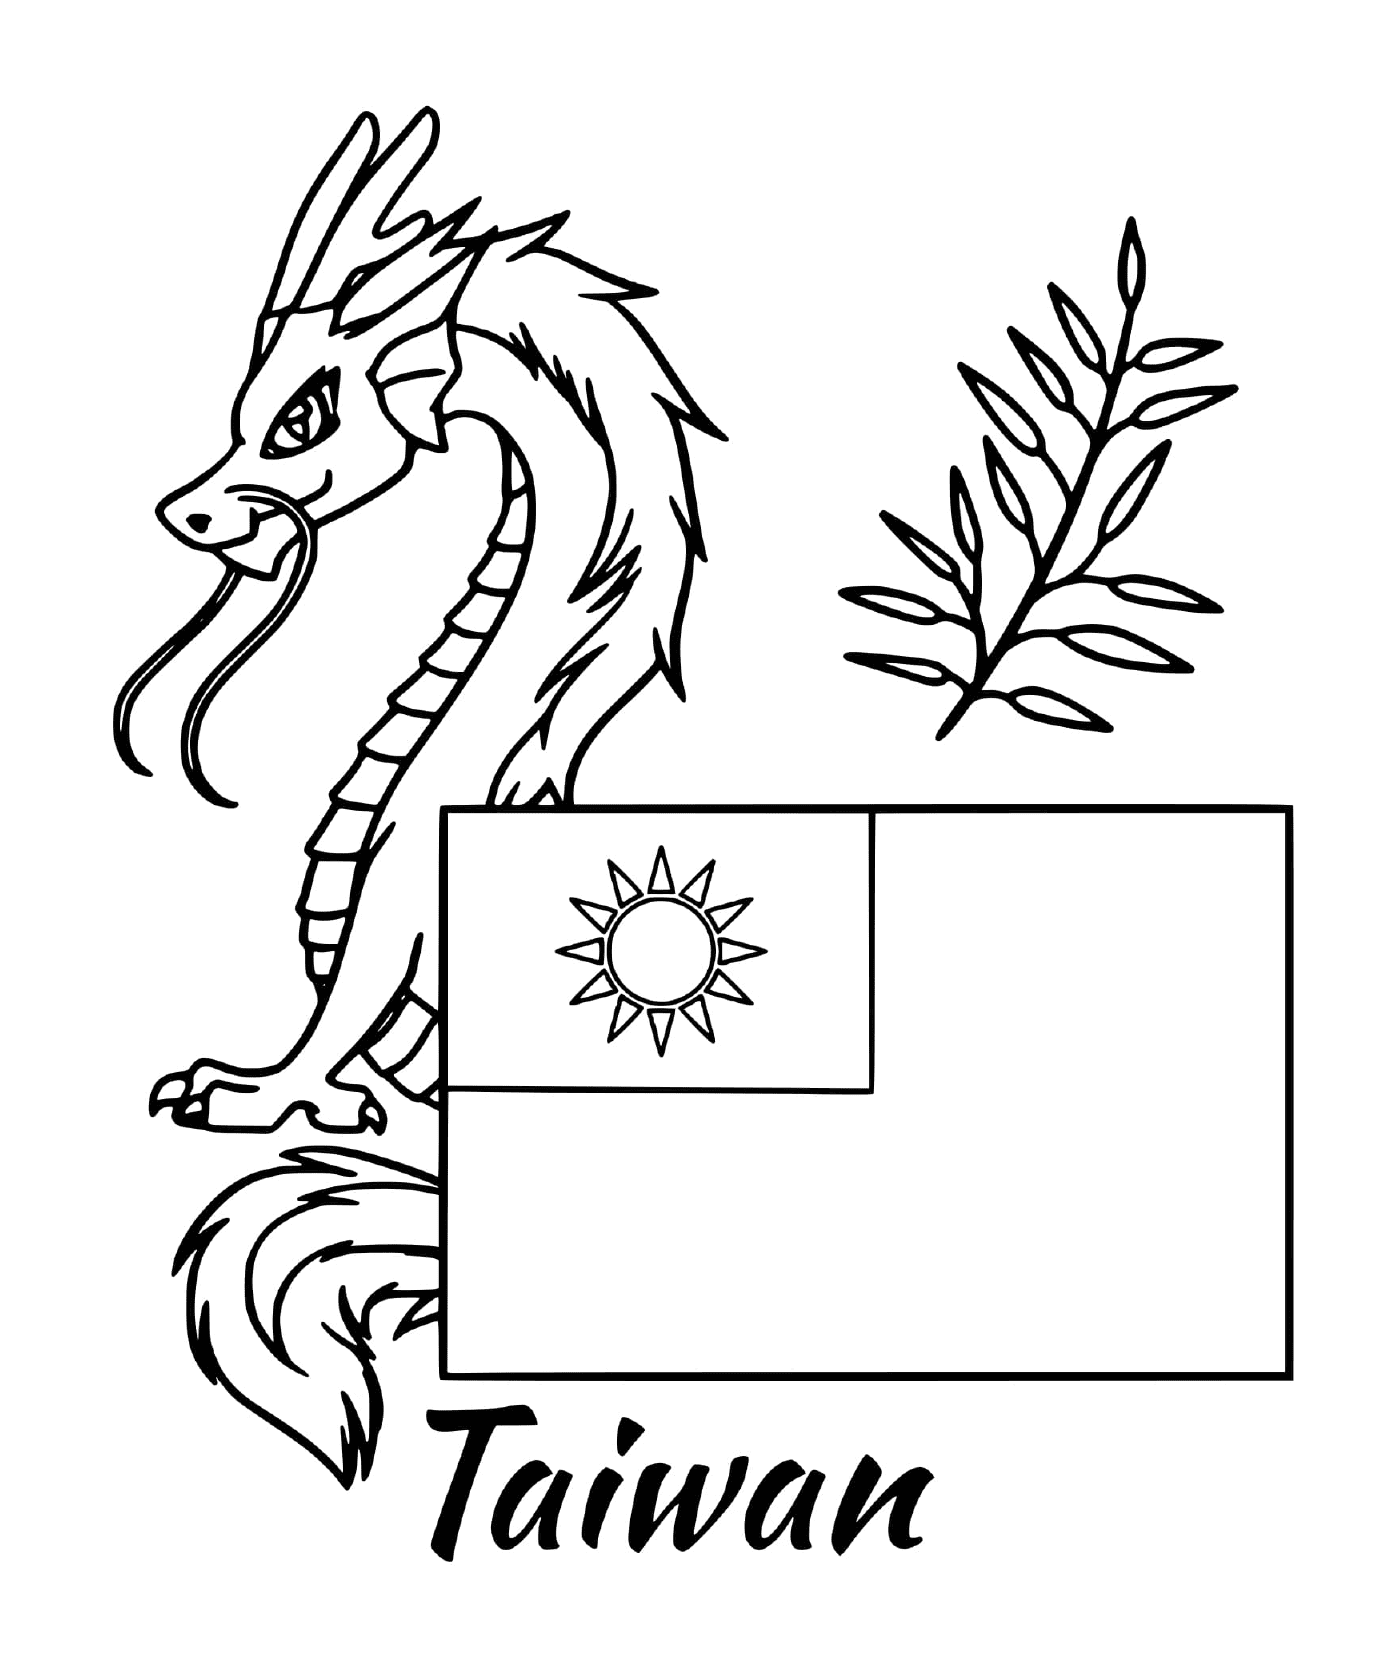  Тайваньский флаг с драконом 